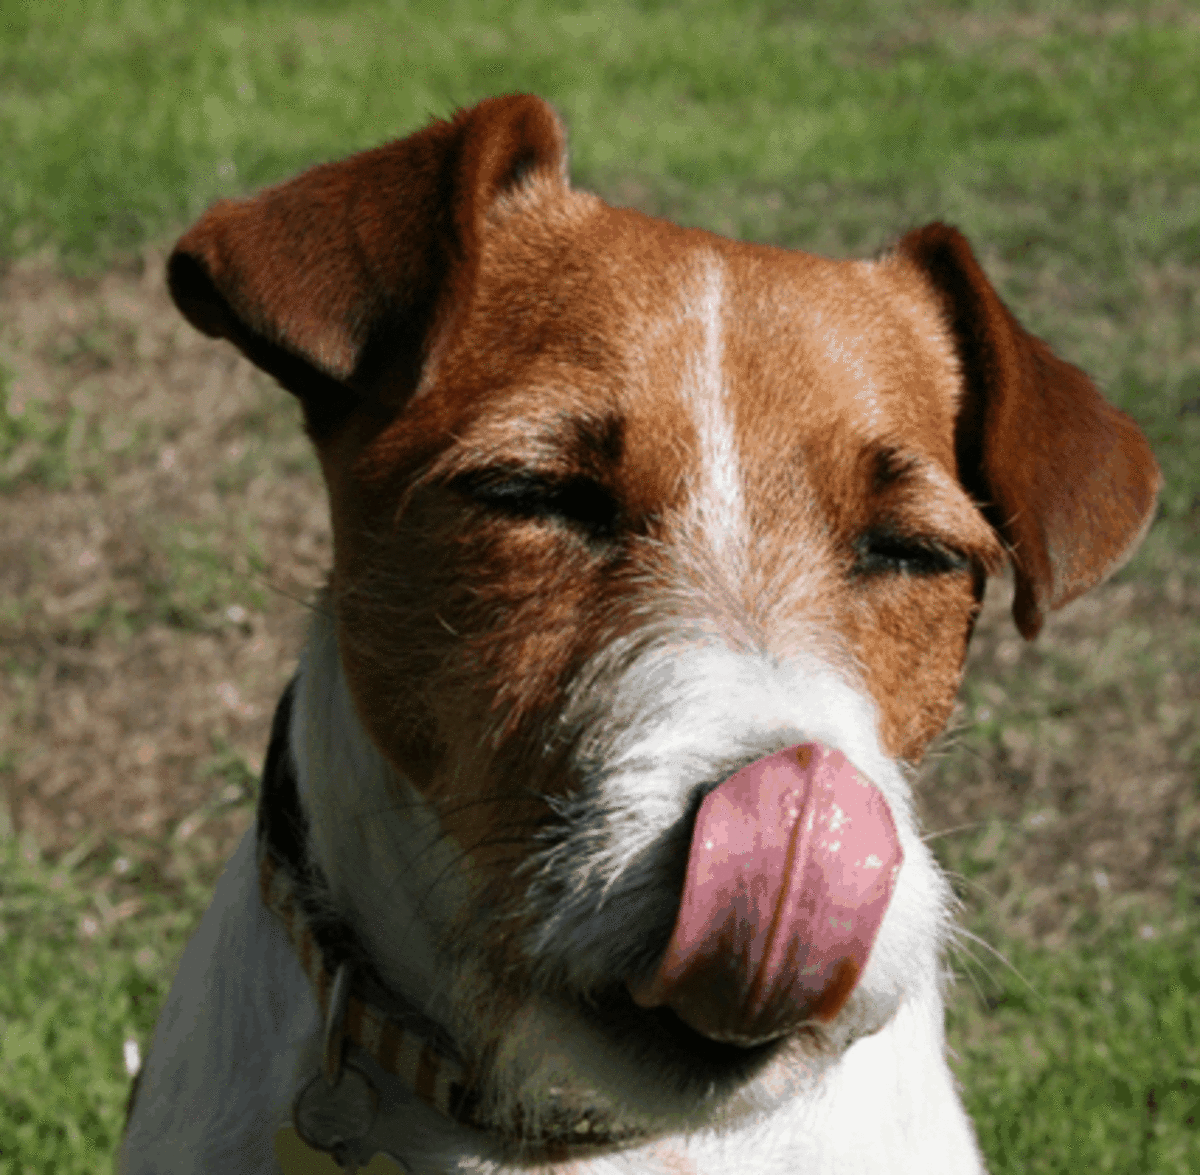 Licking keeps a dog's nose wet!